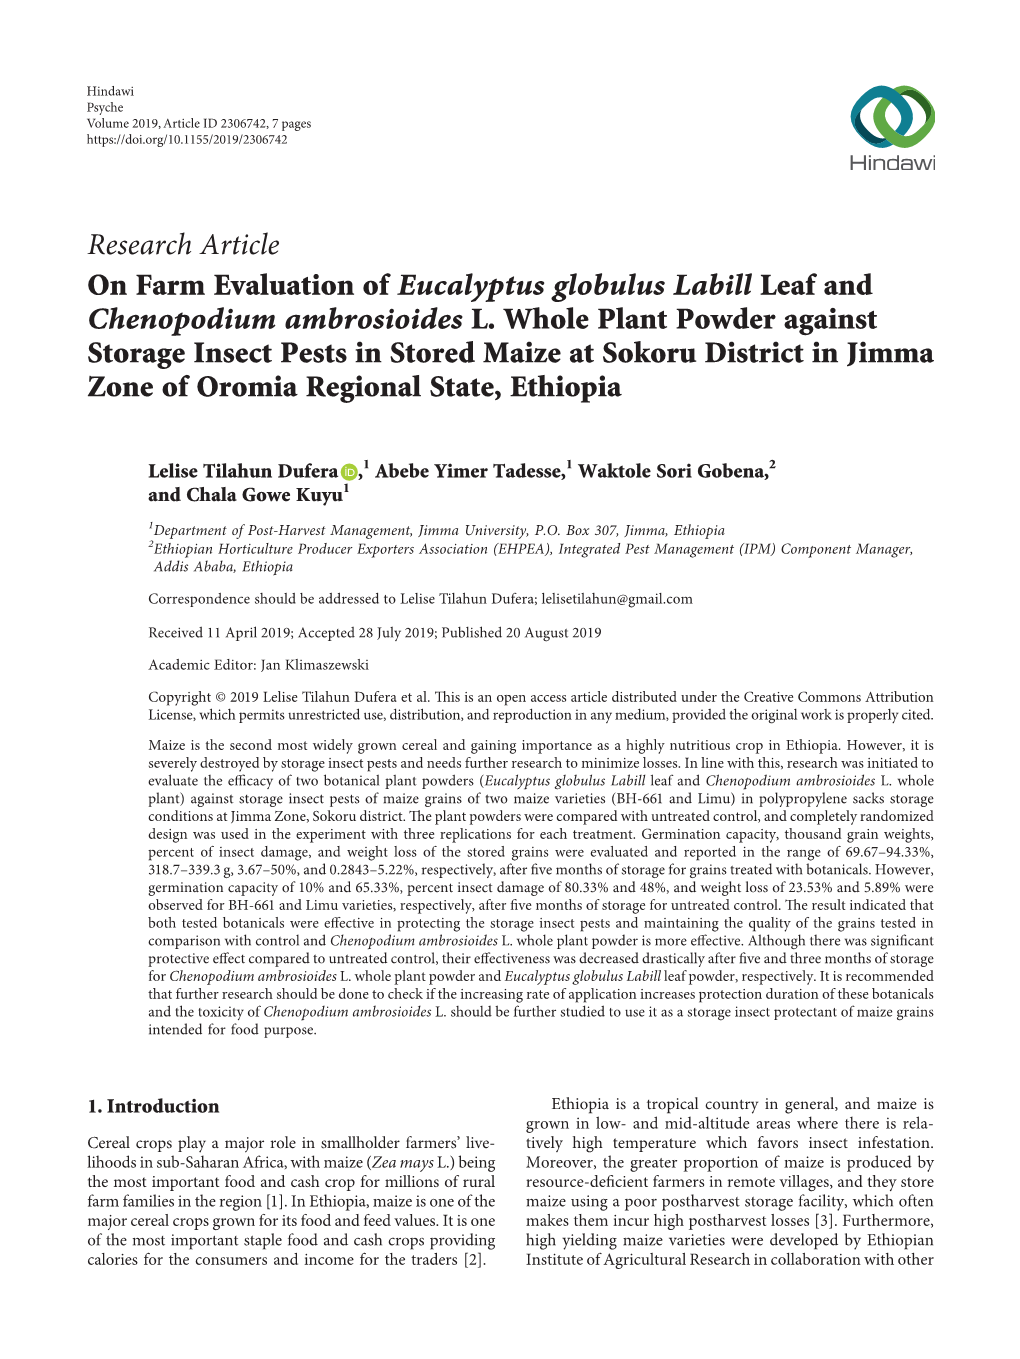 Research Article on Farm Evaluation of Eucalyptus Globulus Labill Leaf and Chenopodium Ambrosioides L. Whole Plant Powder Agains